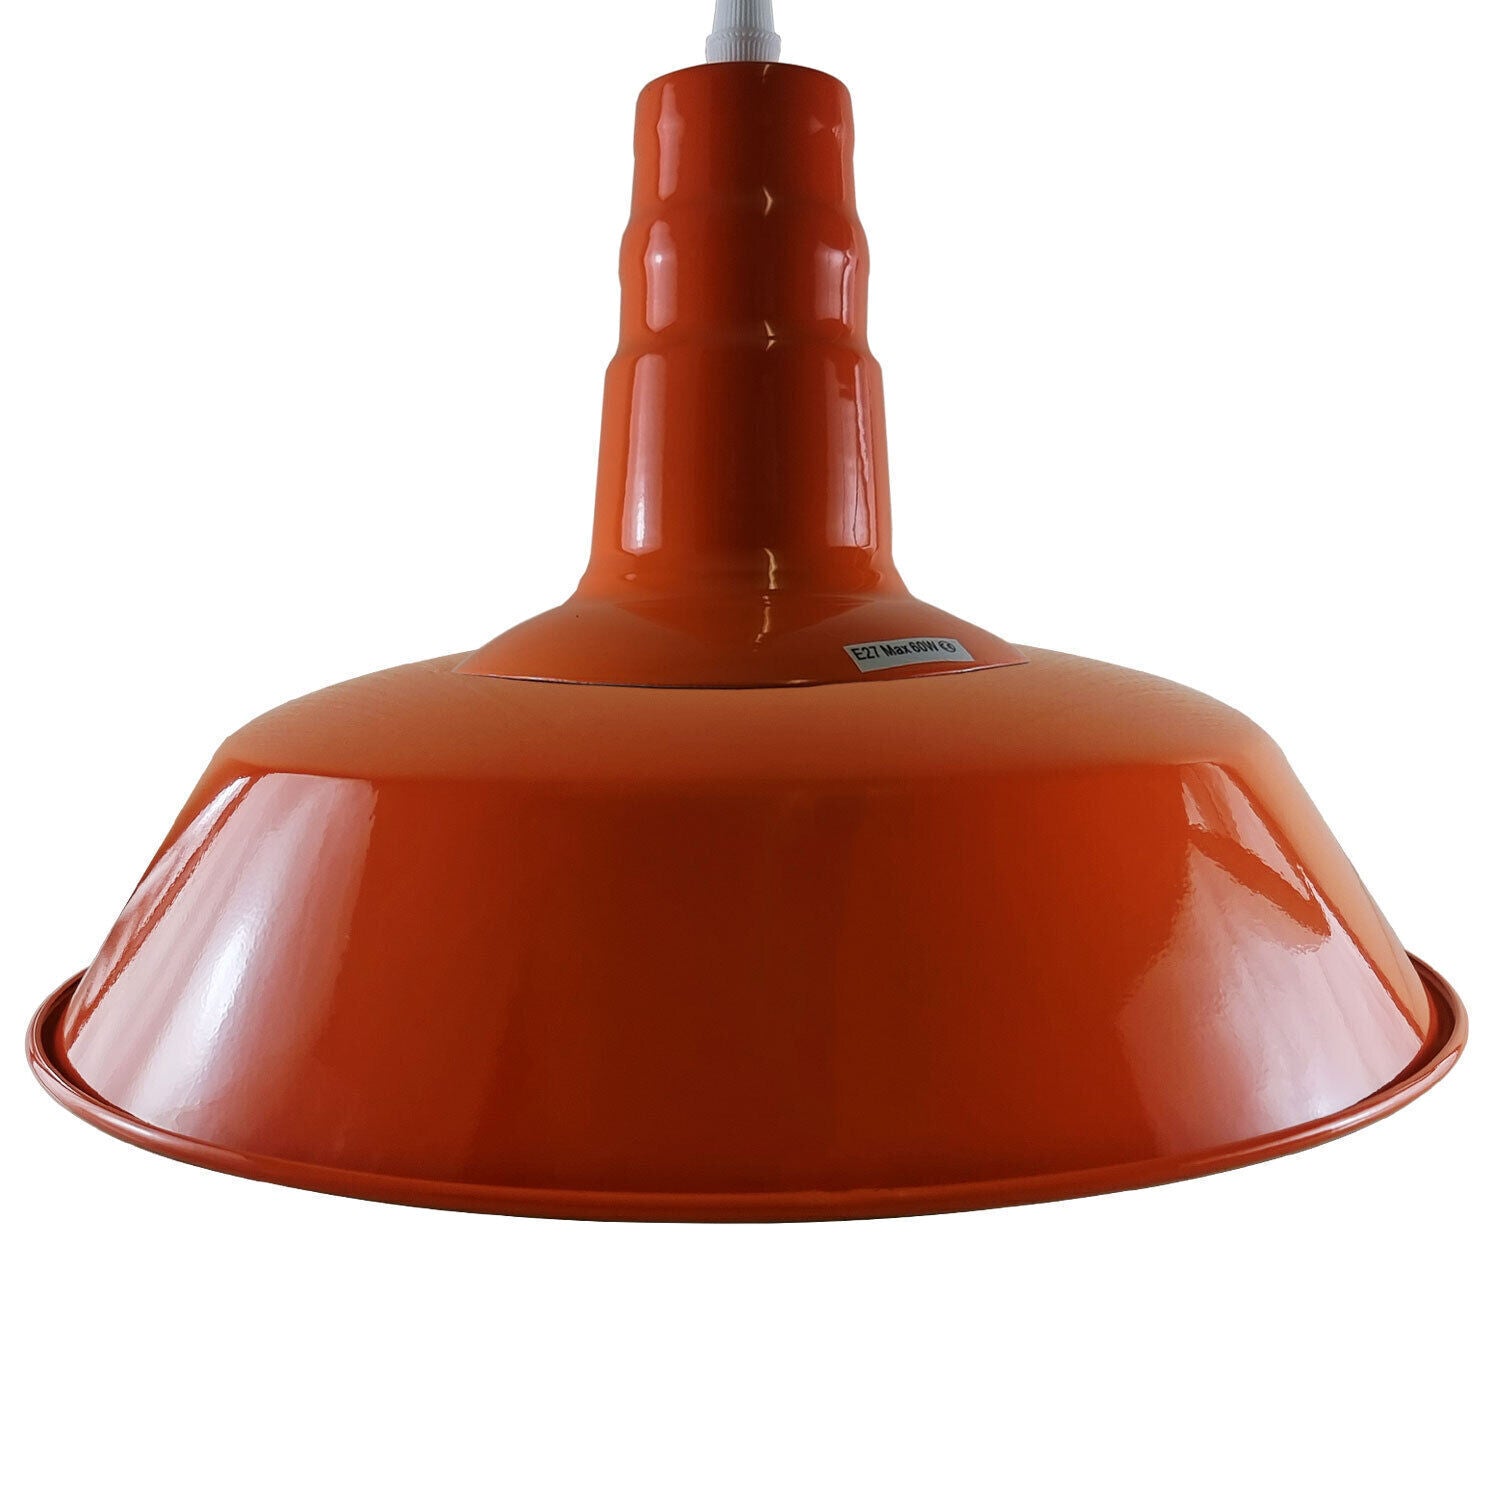 Hanging pendant Ceiling Lamp, Metal Light Shade Lighting UK E27 Edison base Decorate Height Adjustable Pendant Light for Bar, Restaurant , Home and Kitchen